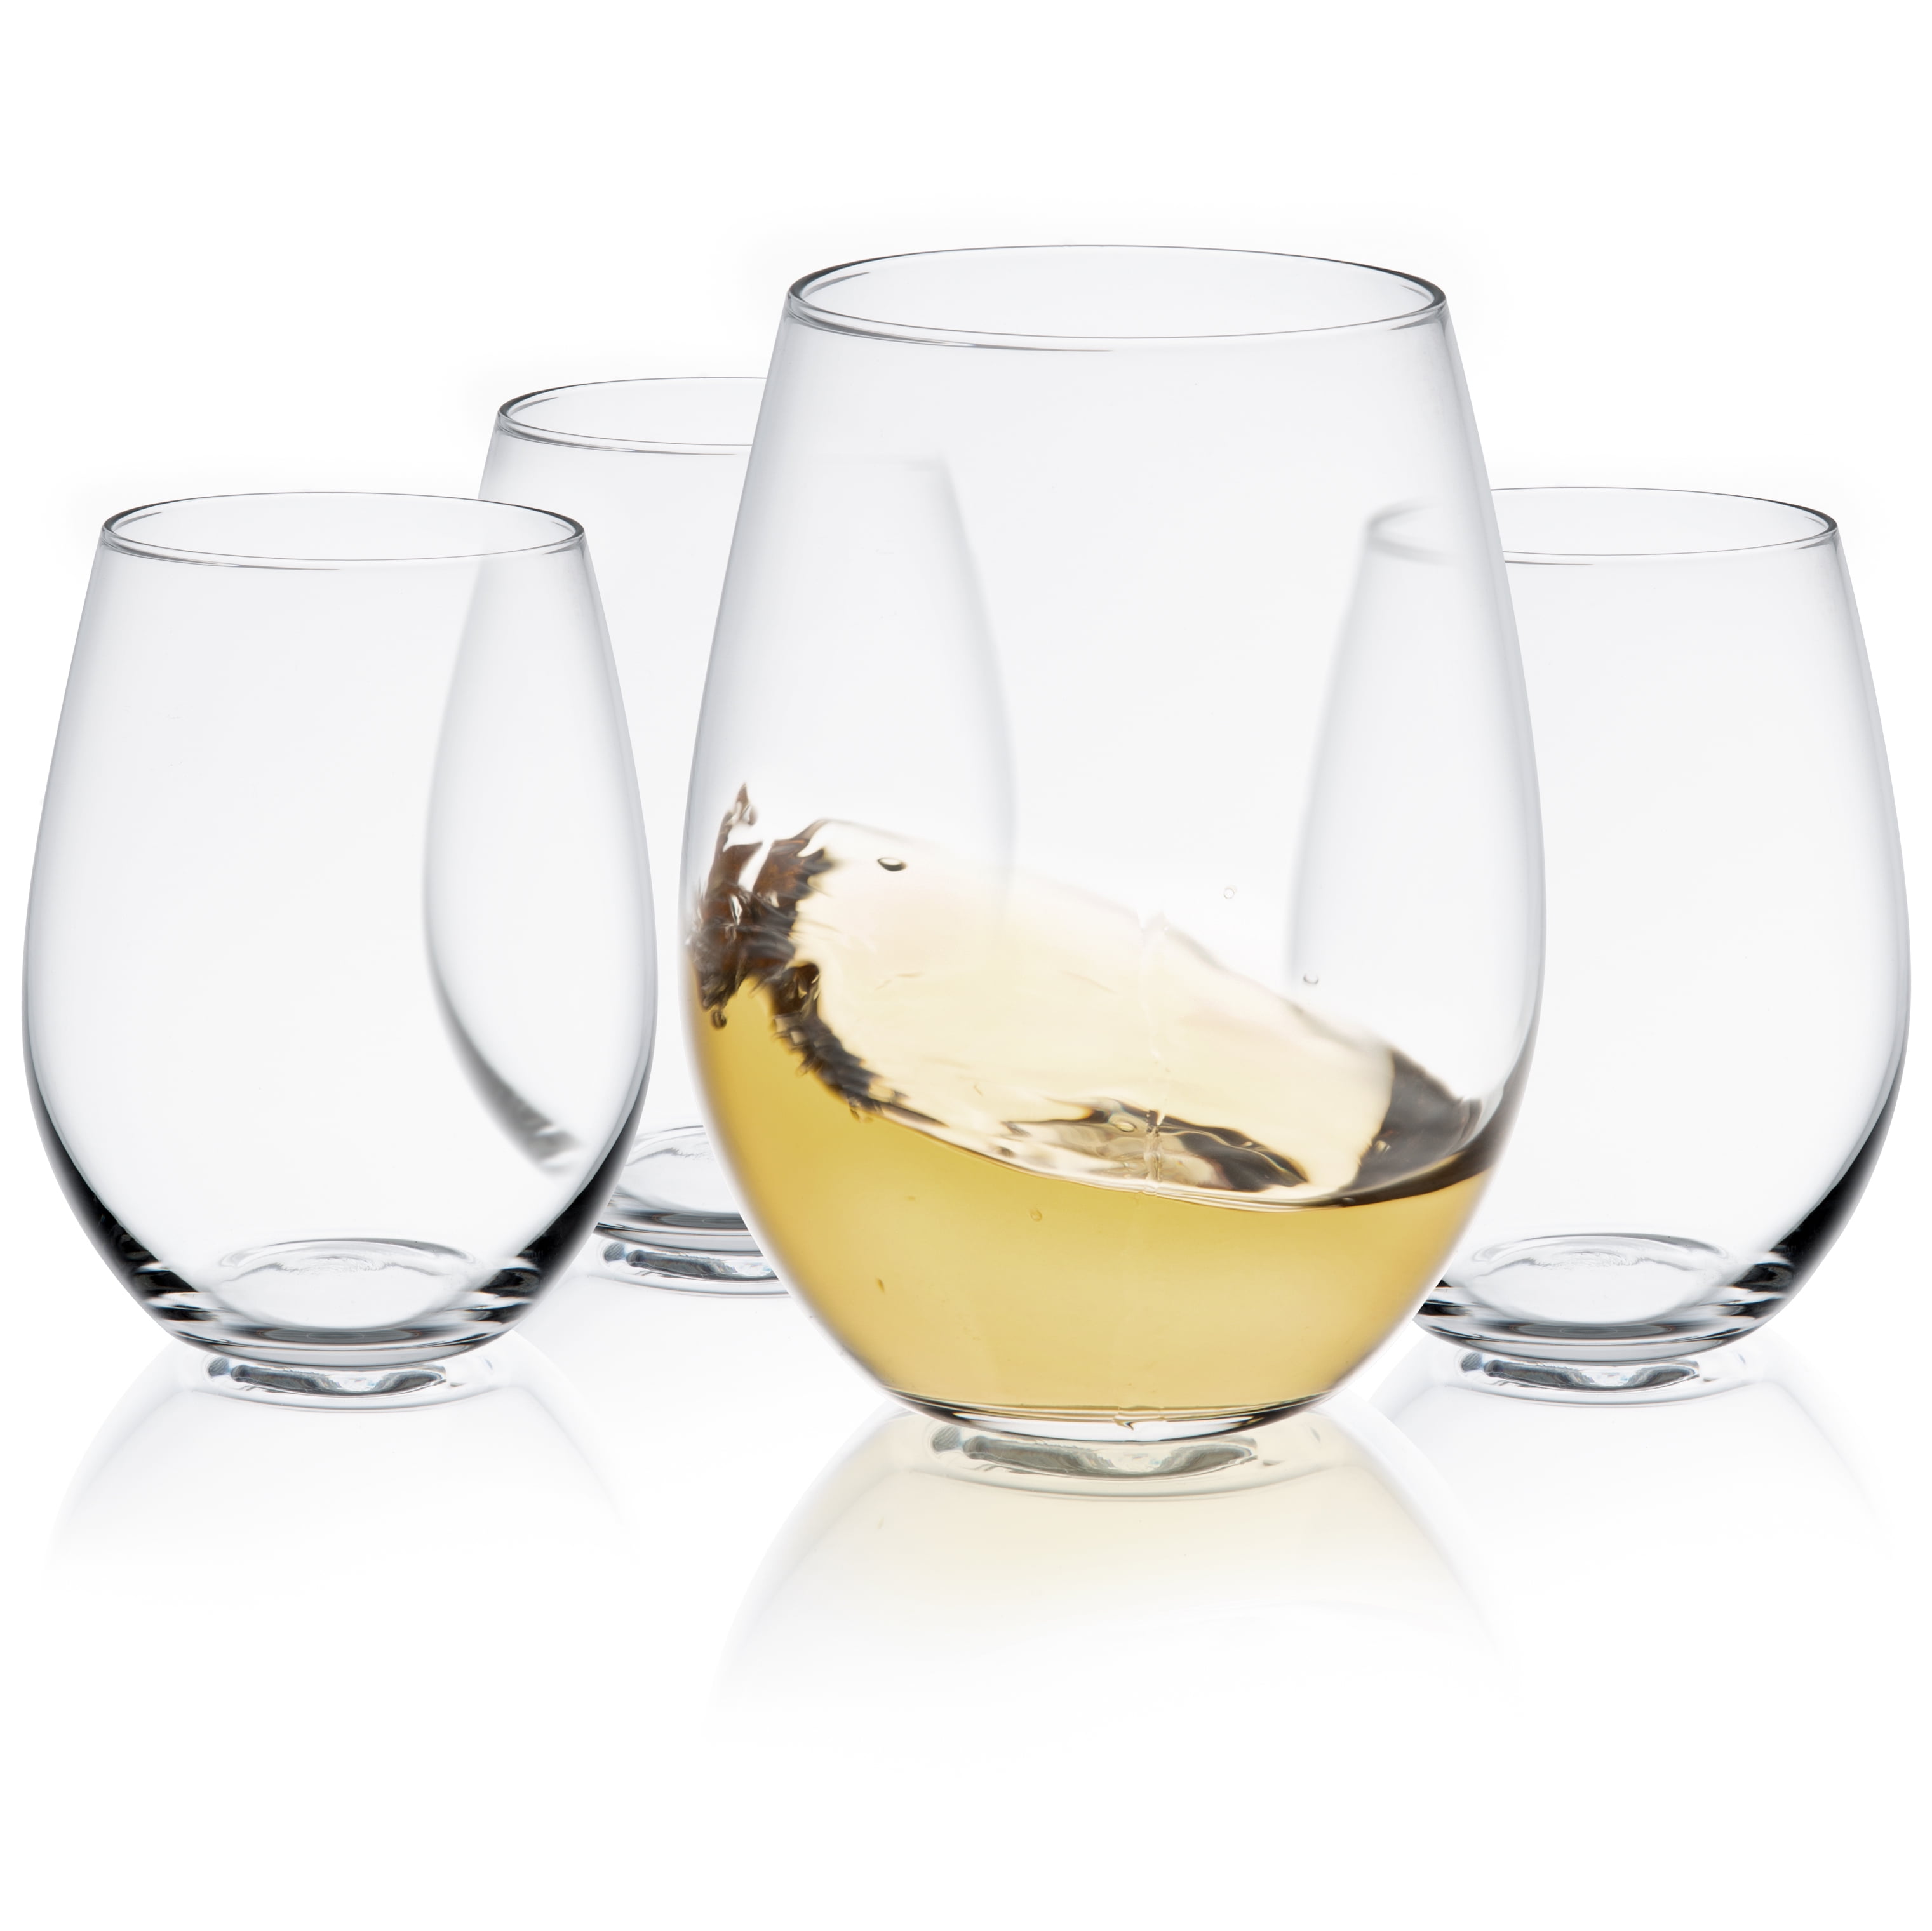 Joy to the Wine Stemless Wine Glass Set